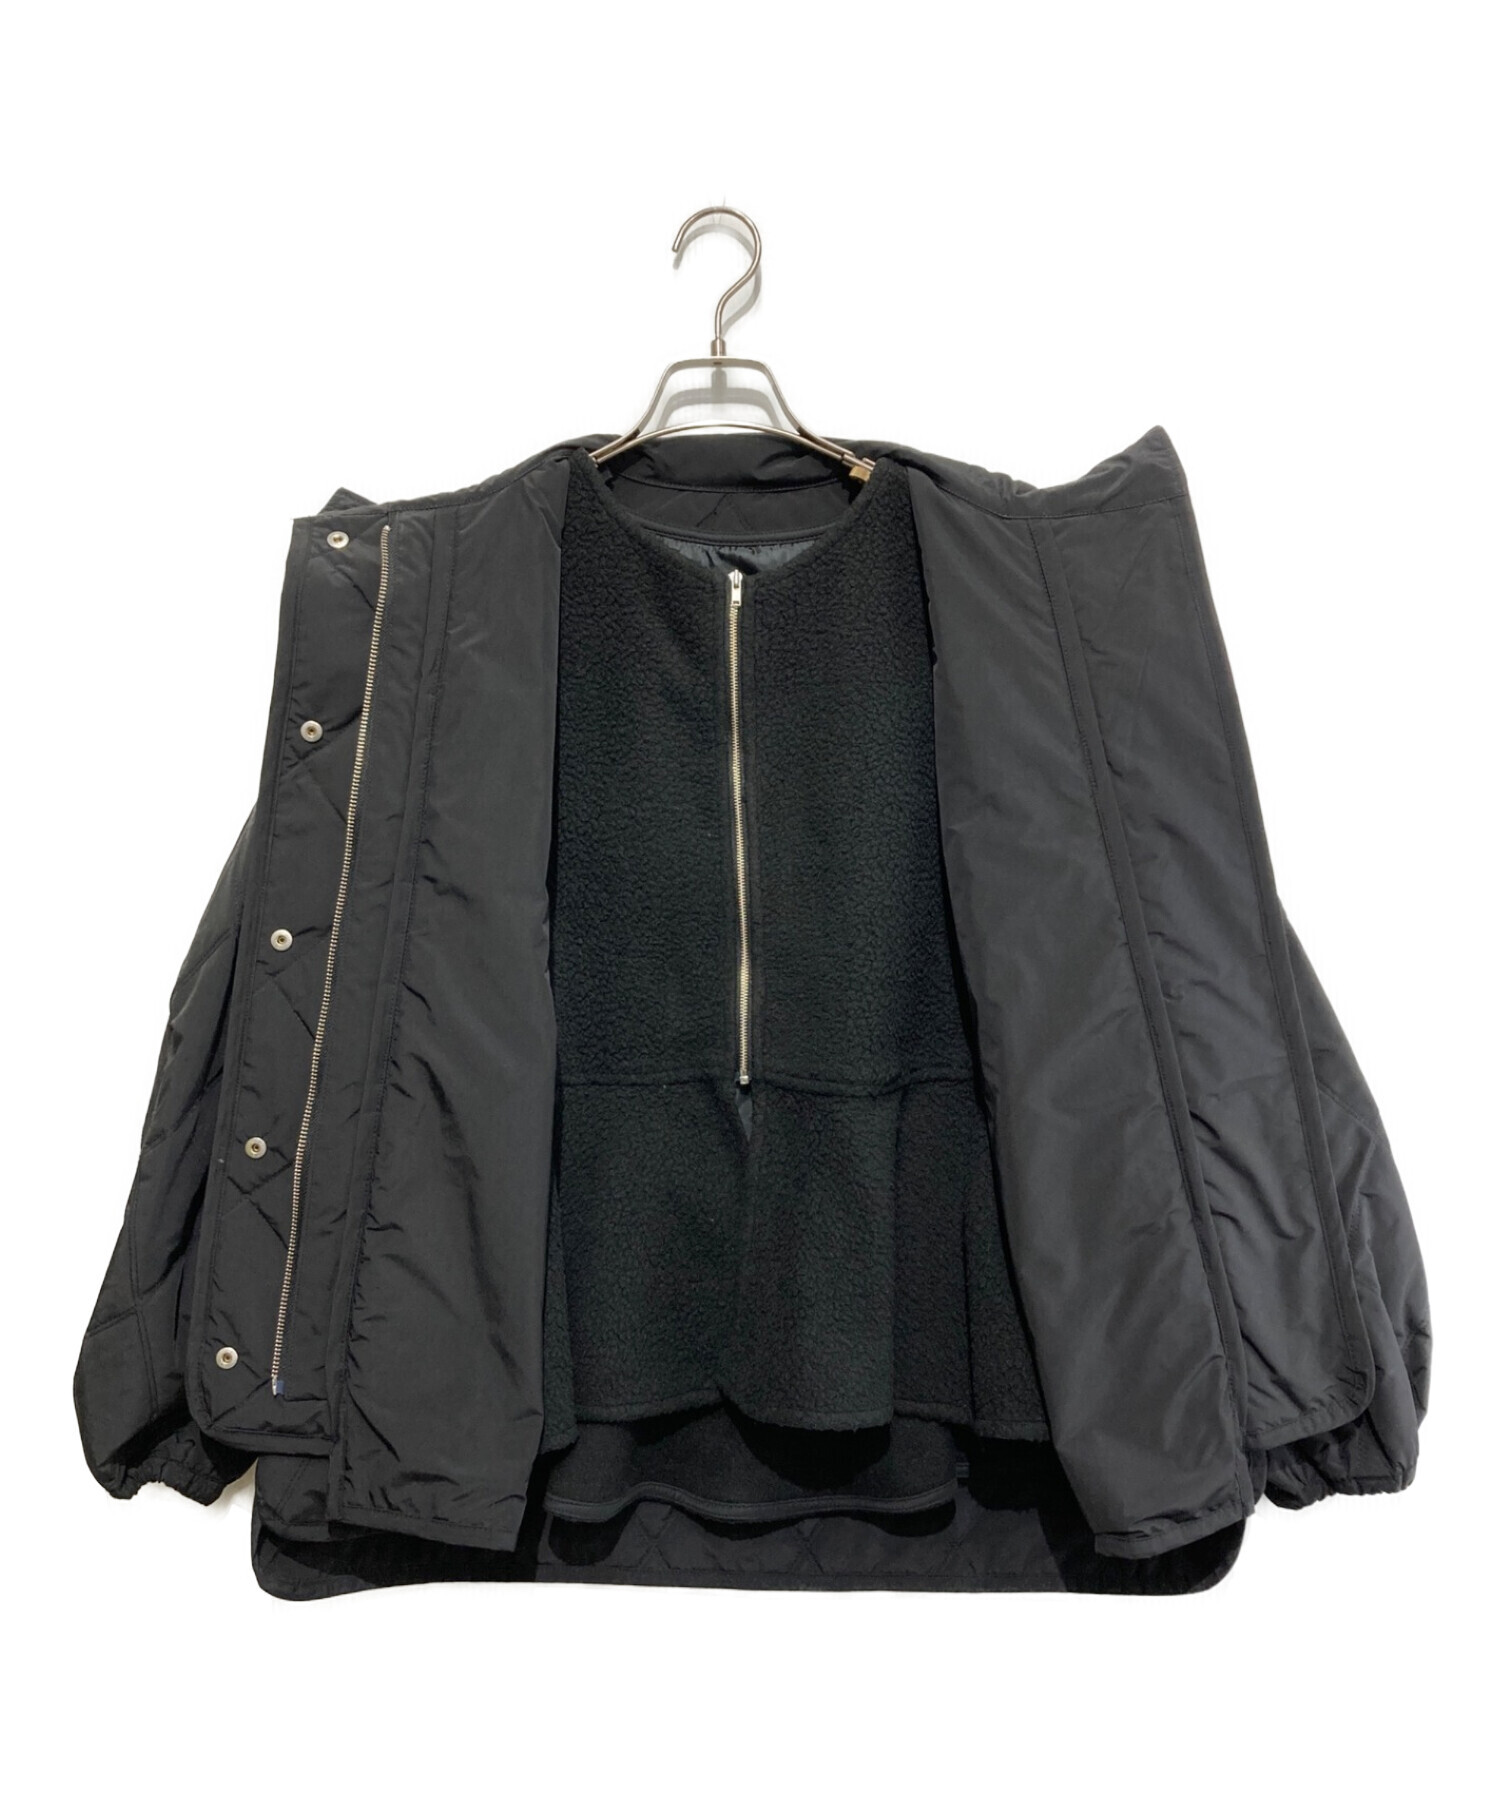 CADUNE (カデュネ) ペプラムベスト付きキルティングコート ブラック サイズ:36